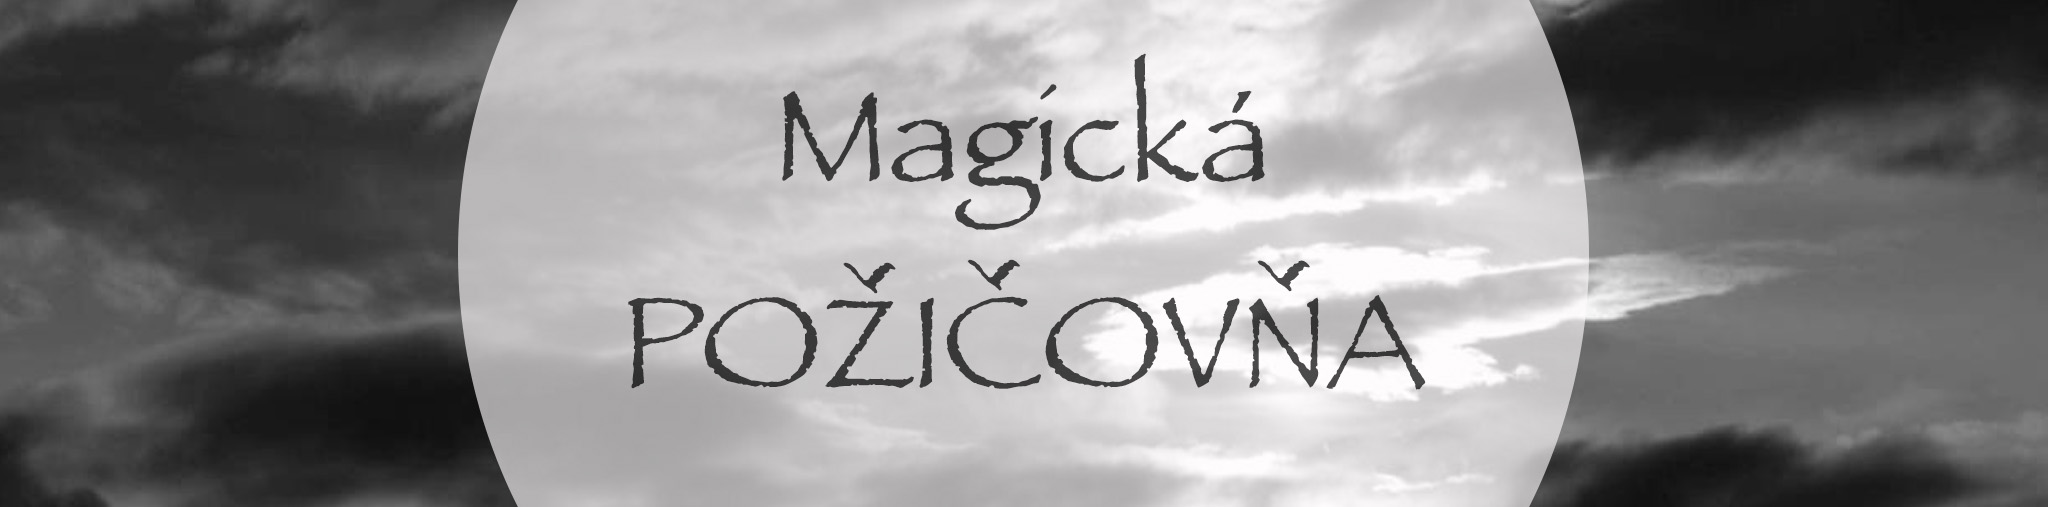 Magicka_POZICOVNA